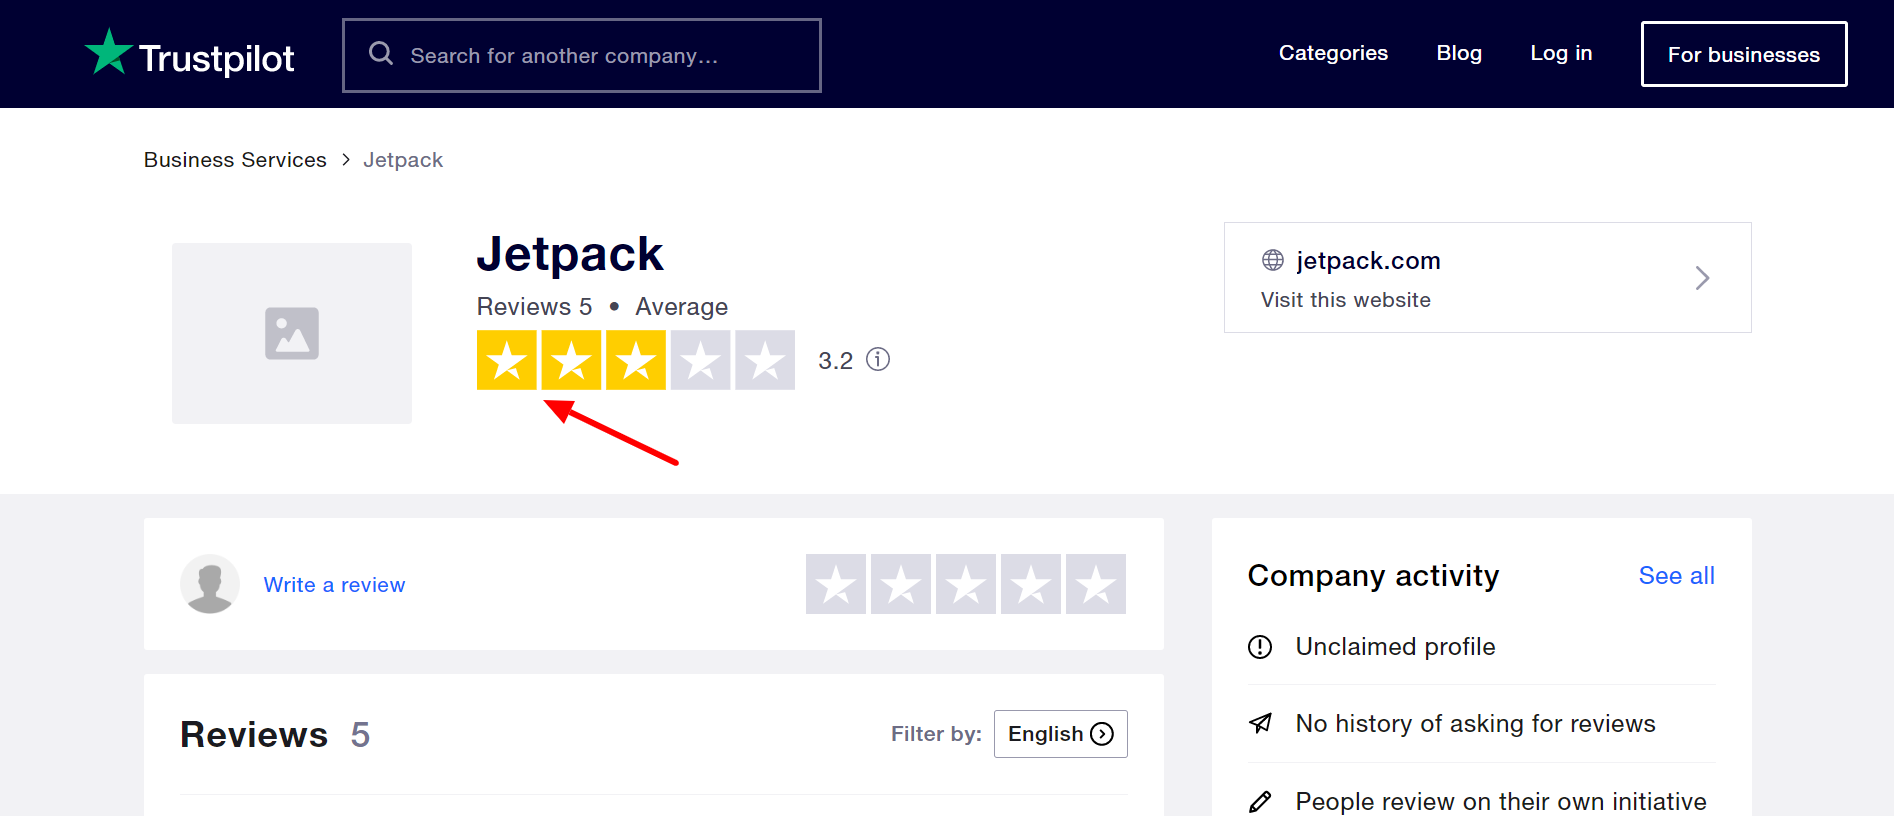 Jetpack Reviews on Trustpilot